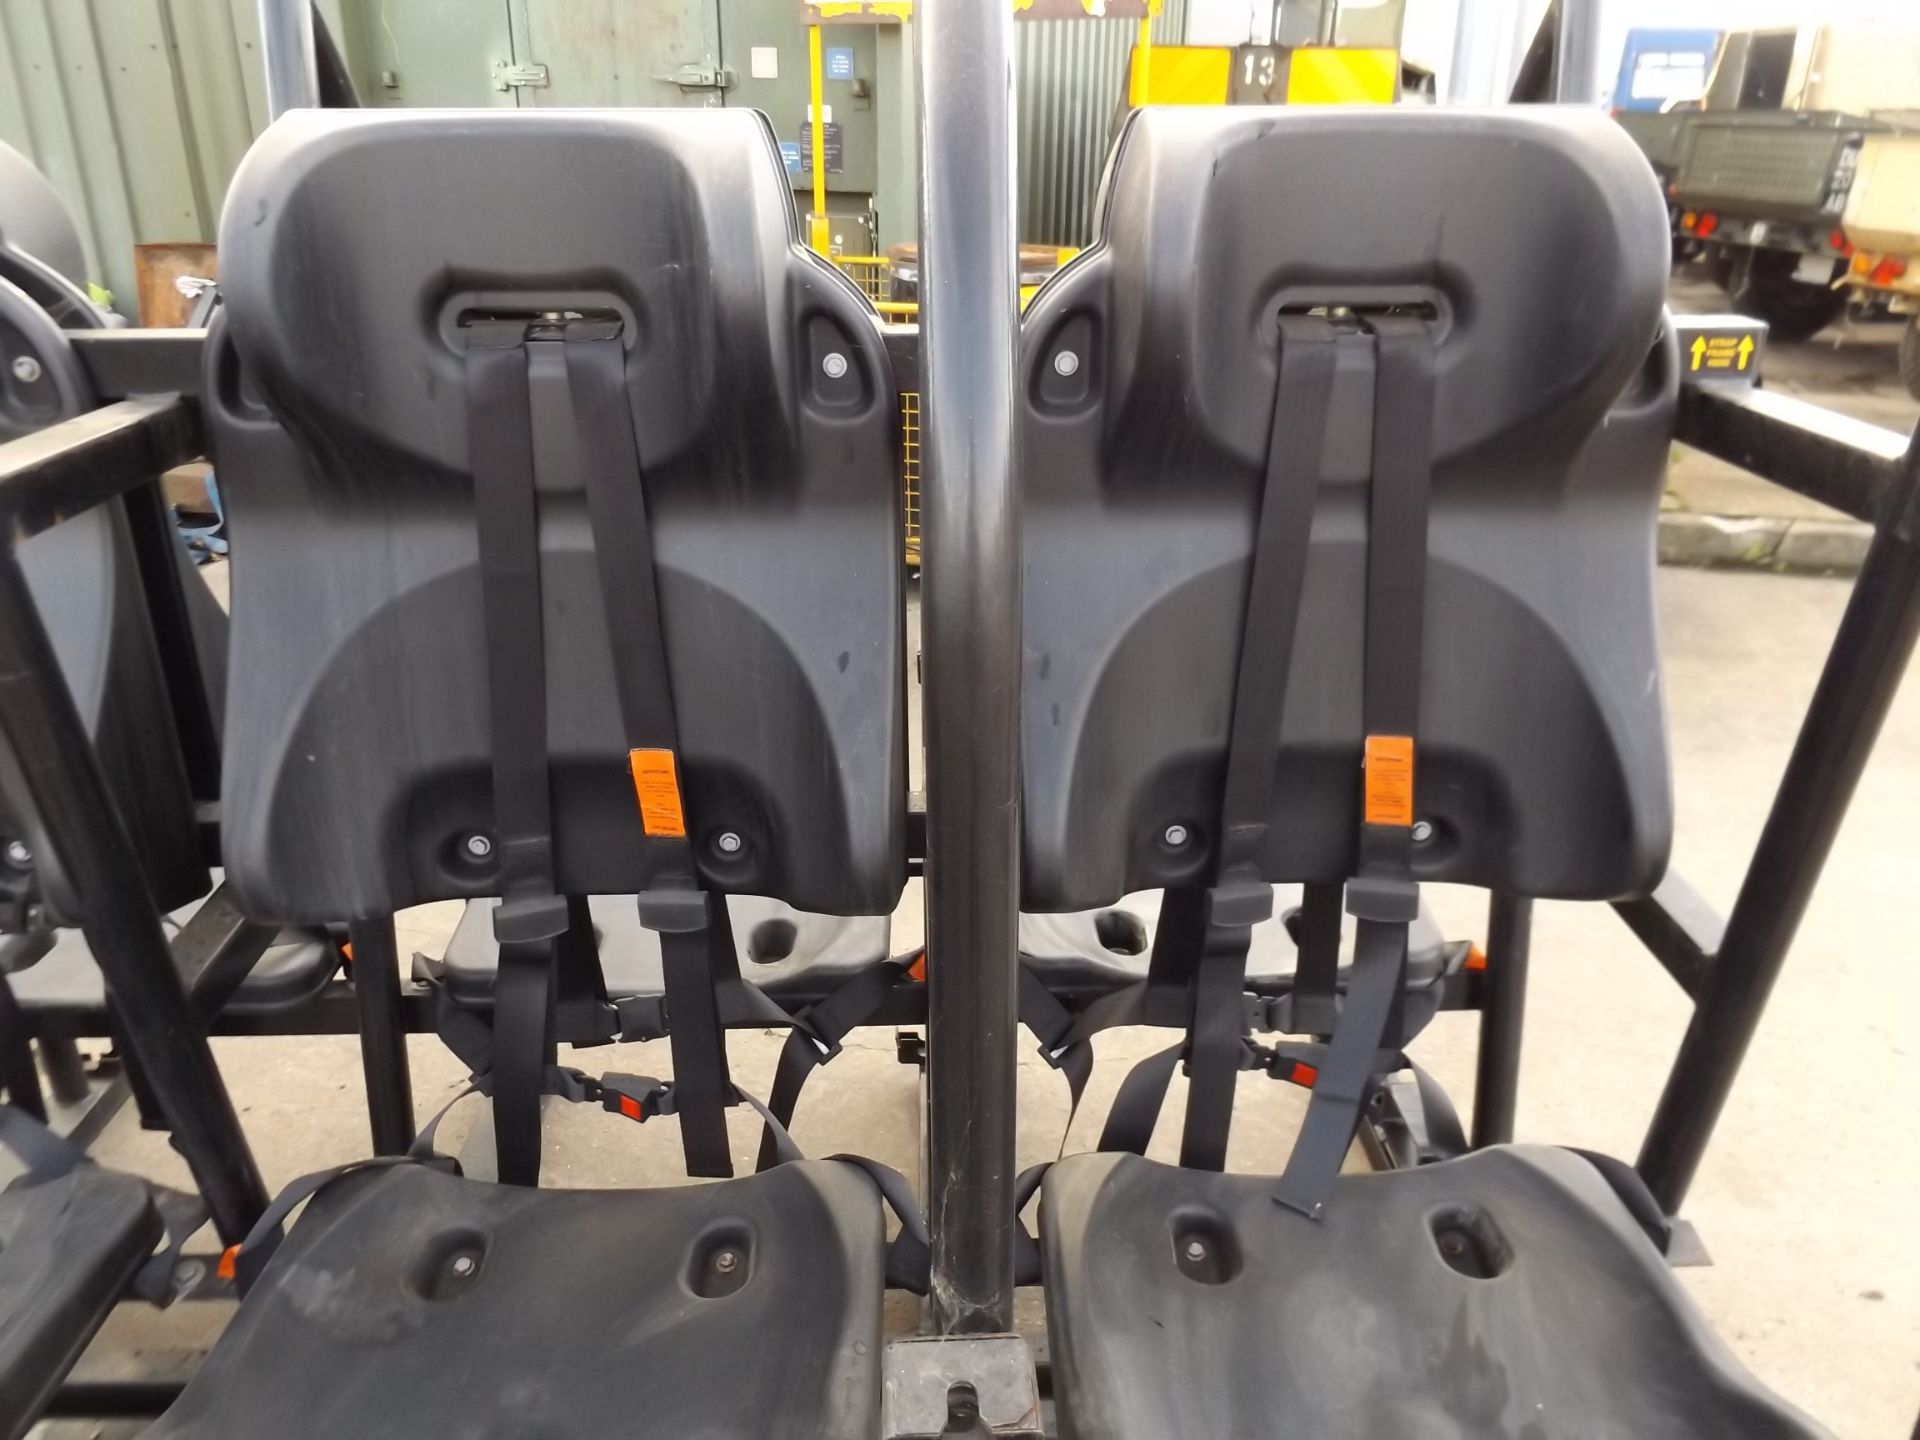 Roush Technologies 8 Man GSV Enhanced Seating Kit suitable for Leyland Dafs, Bedfords etc - Image 2 of 6